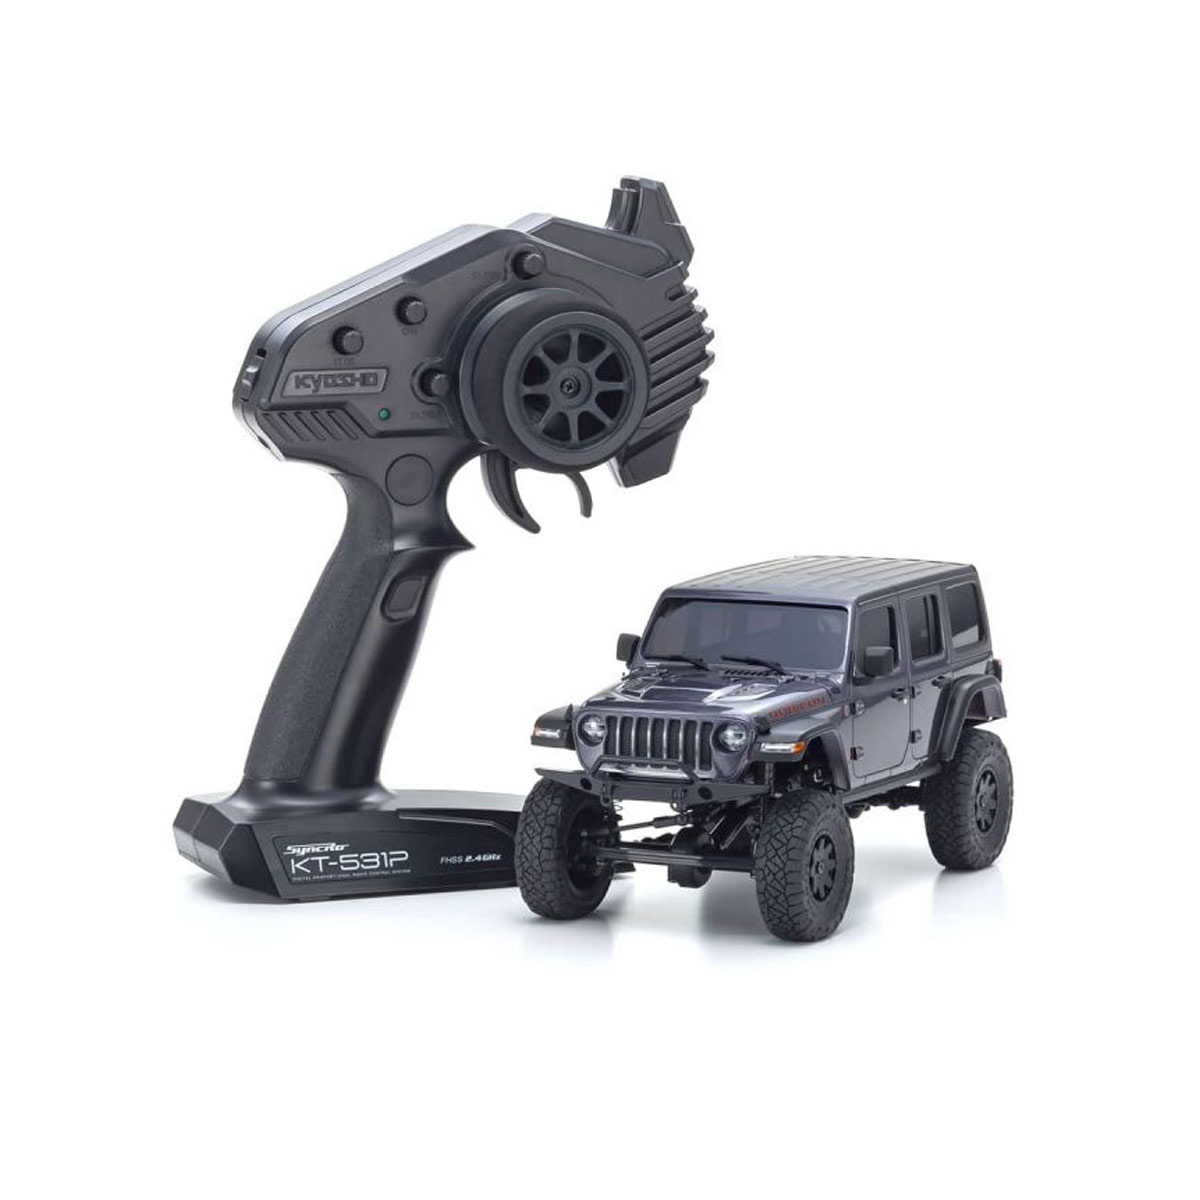 1/28 Jeep Wrangler Unlimited Rubicon MINI-Z 4x4 Crawler RTR, Metallic Granite